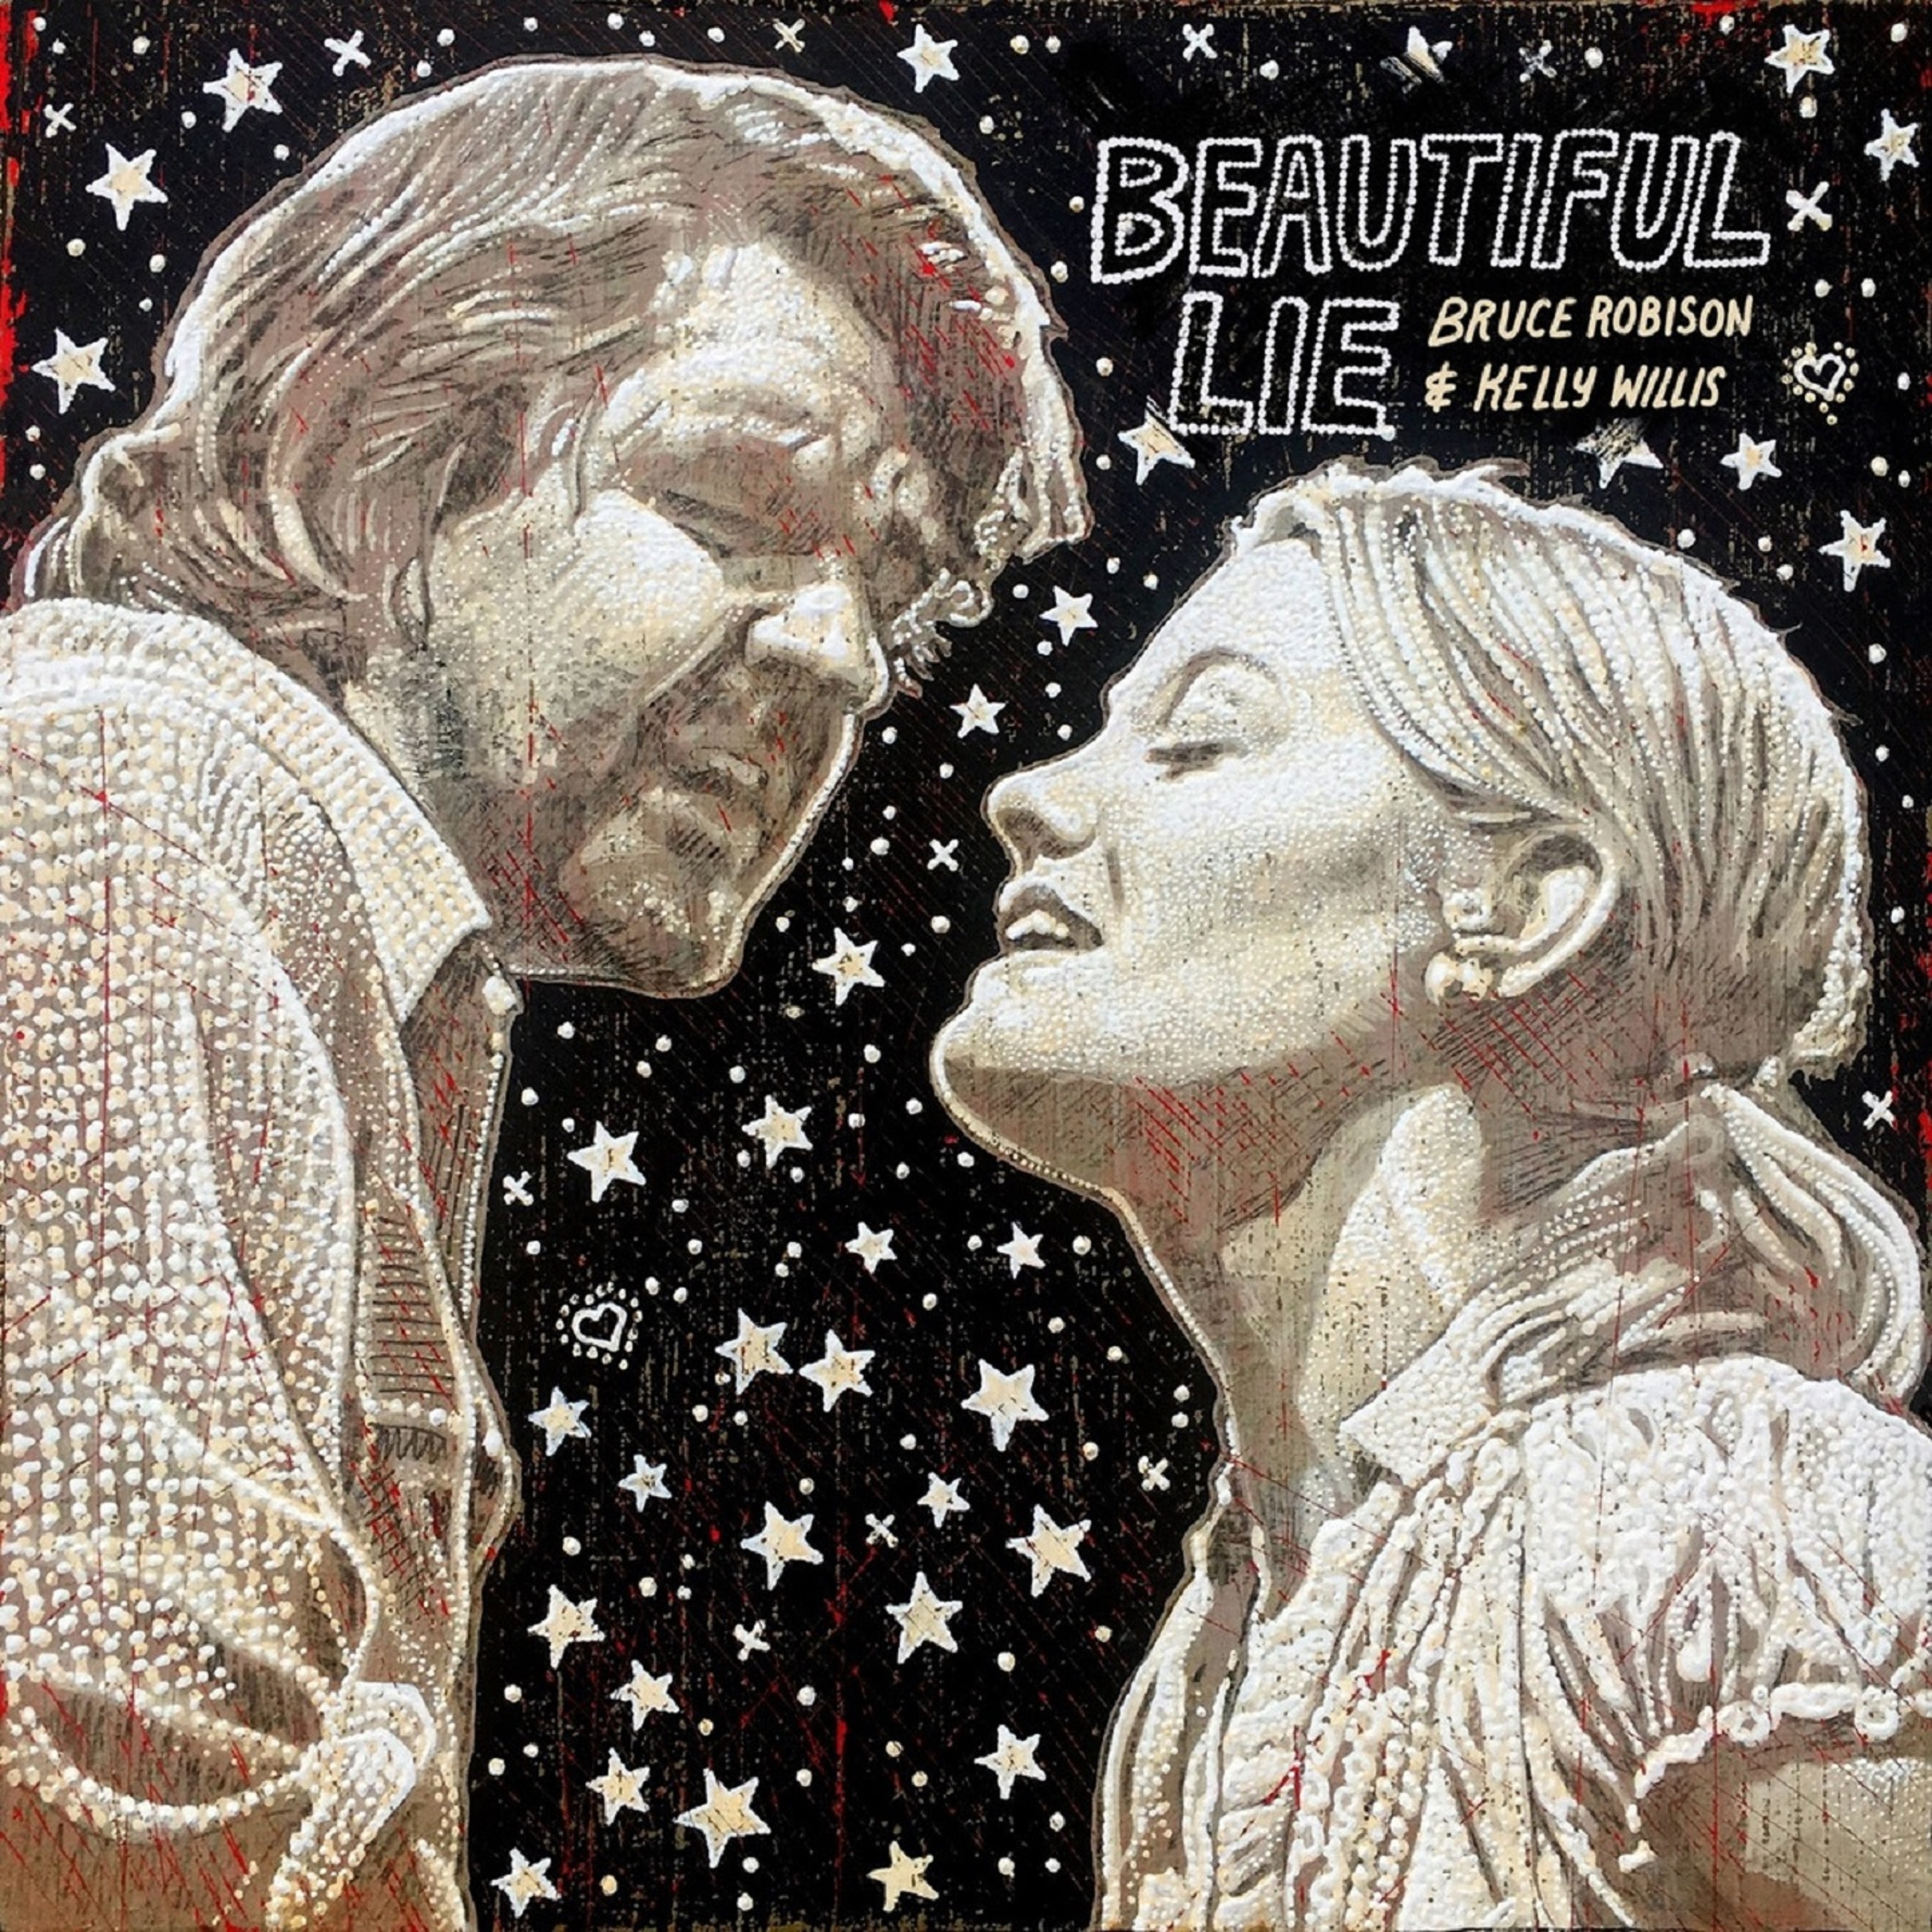 Bruce Robison & Kelly Willis Release 'Beautiful Lie'